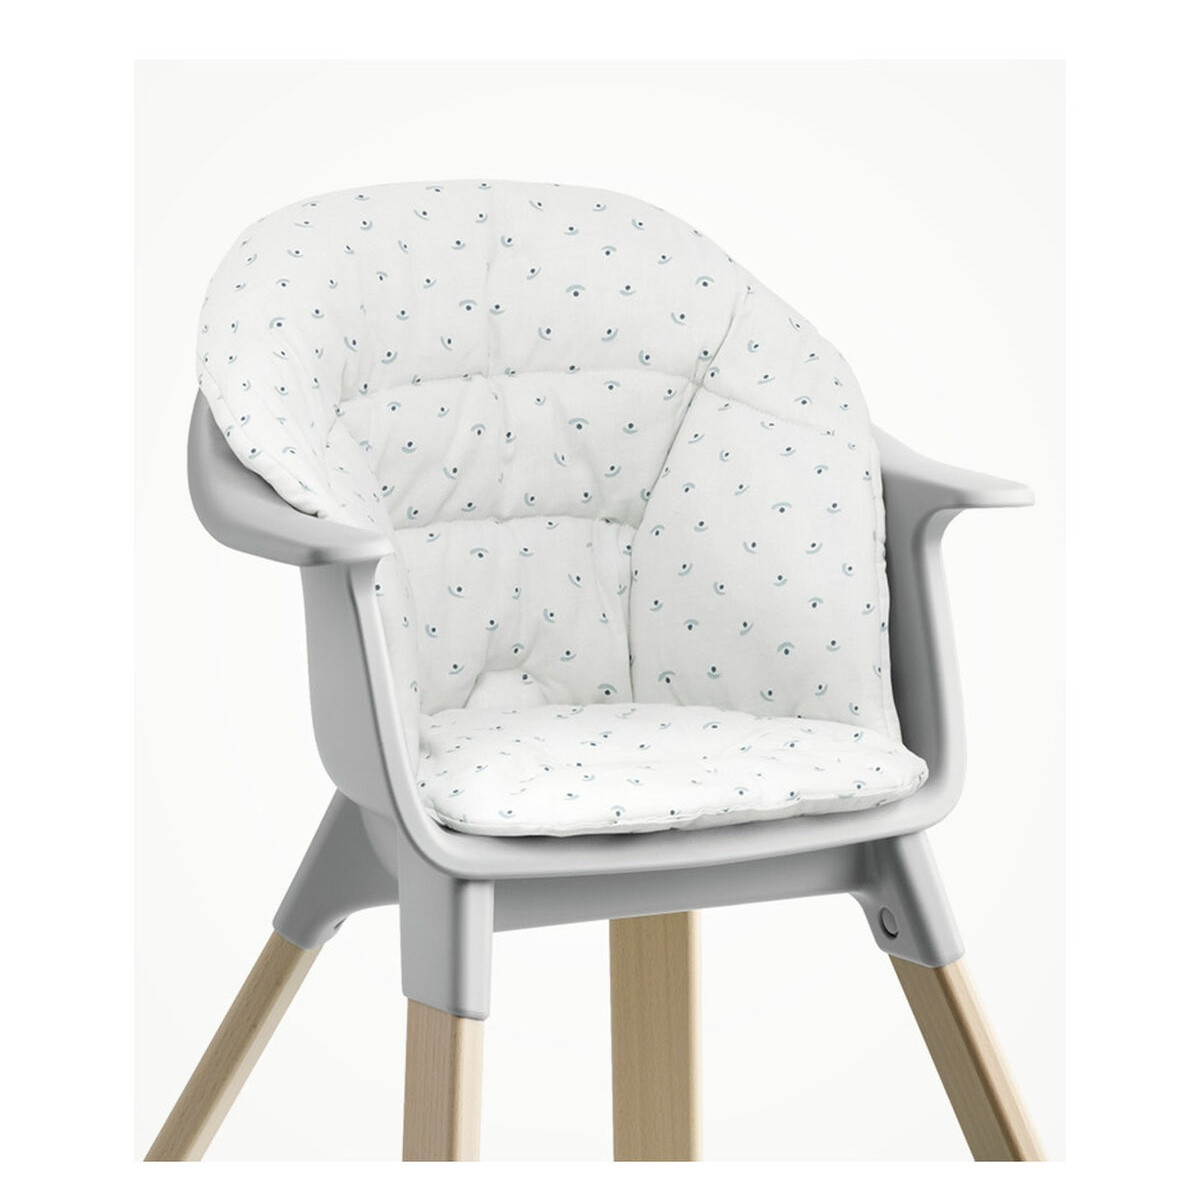 Coussin pour chaise haute Clikk Grey sprinkles STOKKE, Vente en ligne de Chaise  haute